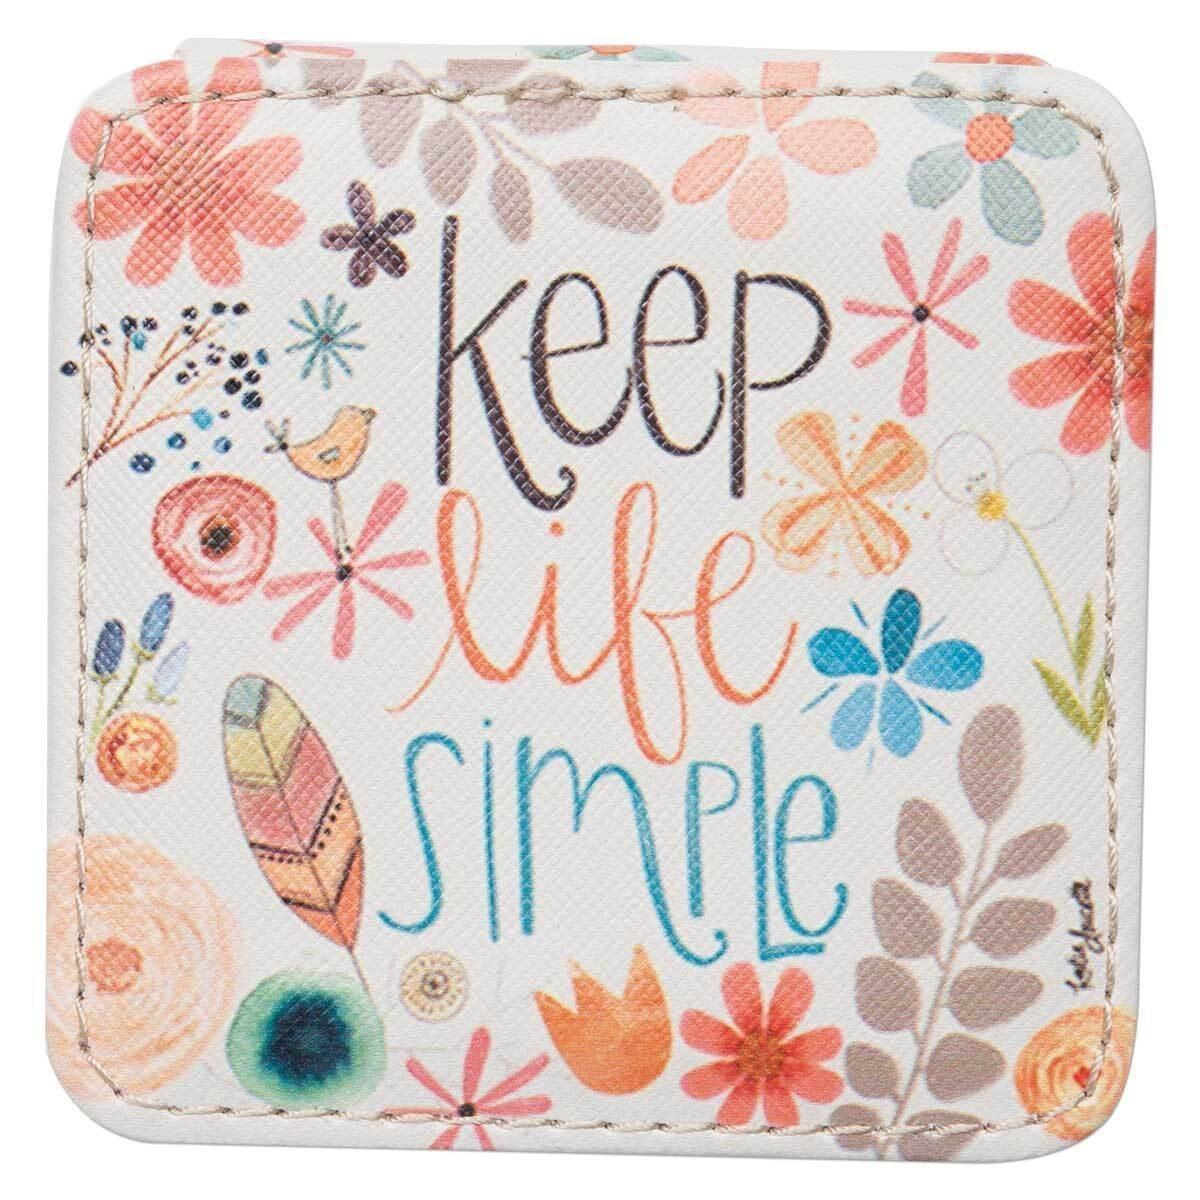 Keep Life Simple Fashion Box - Sunshine and Grace Gifts